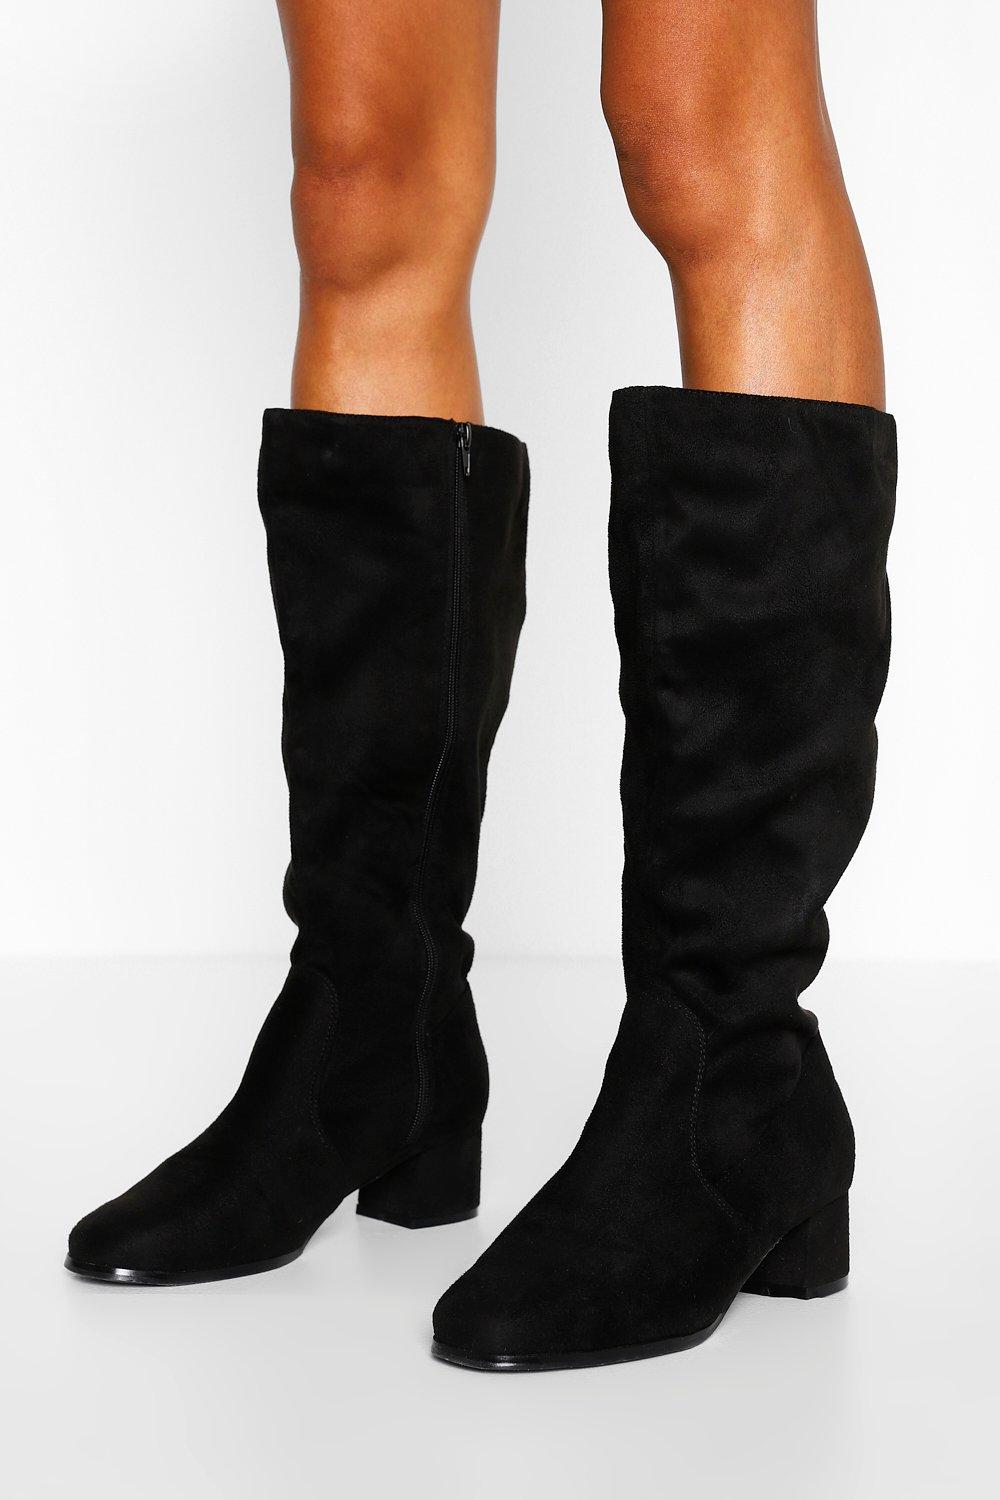 wide calf knee high black boots